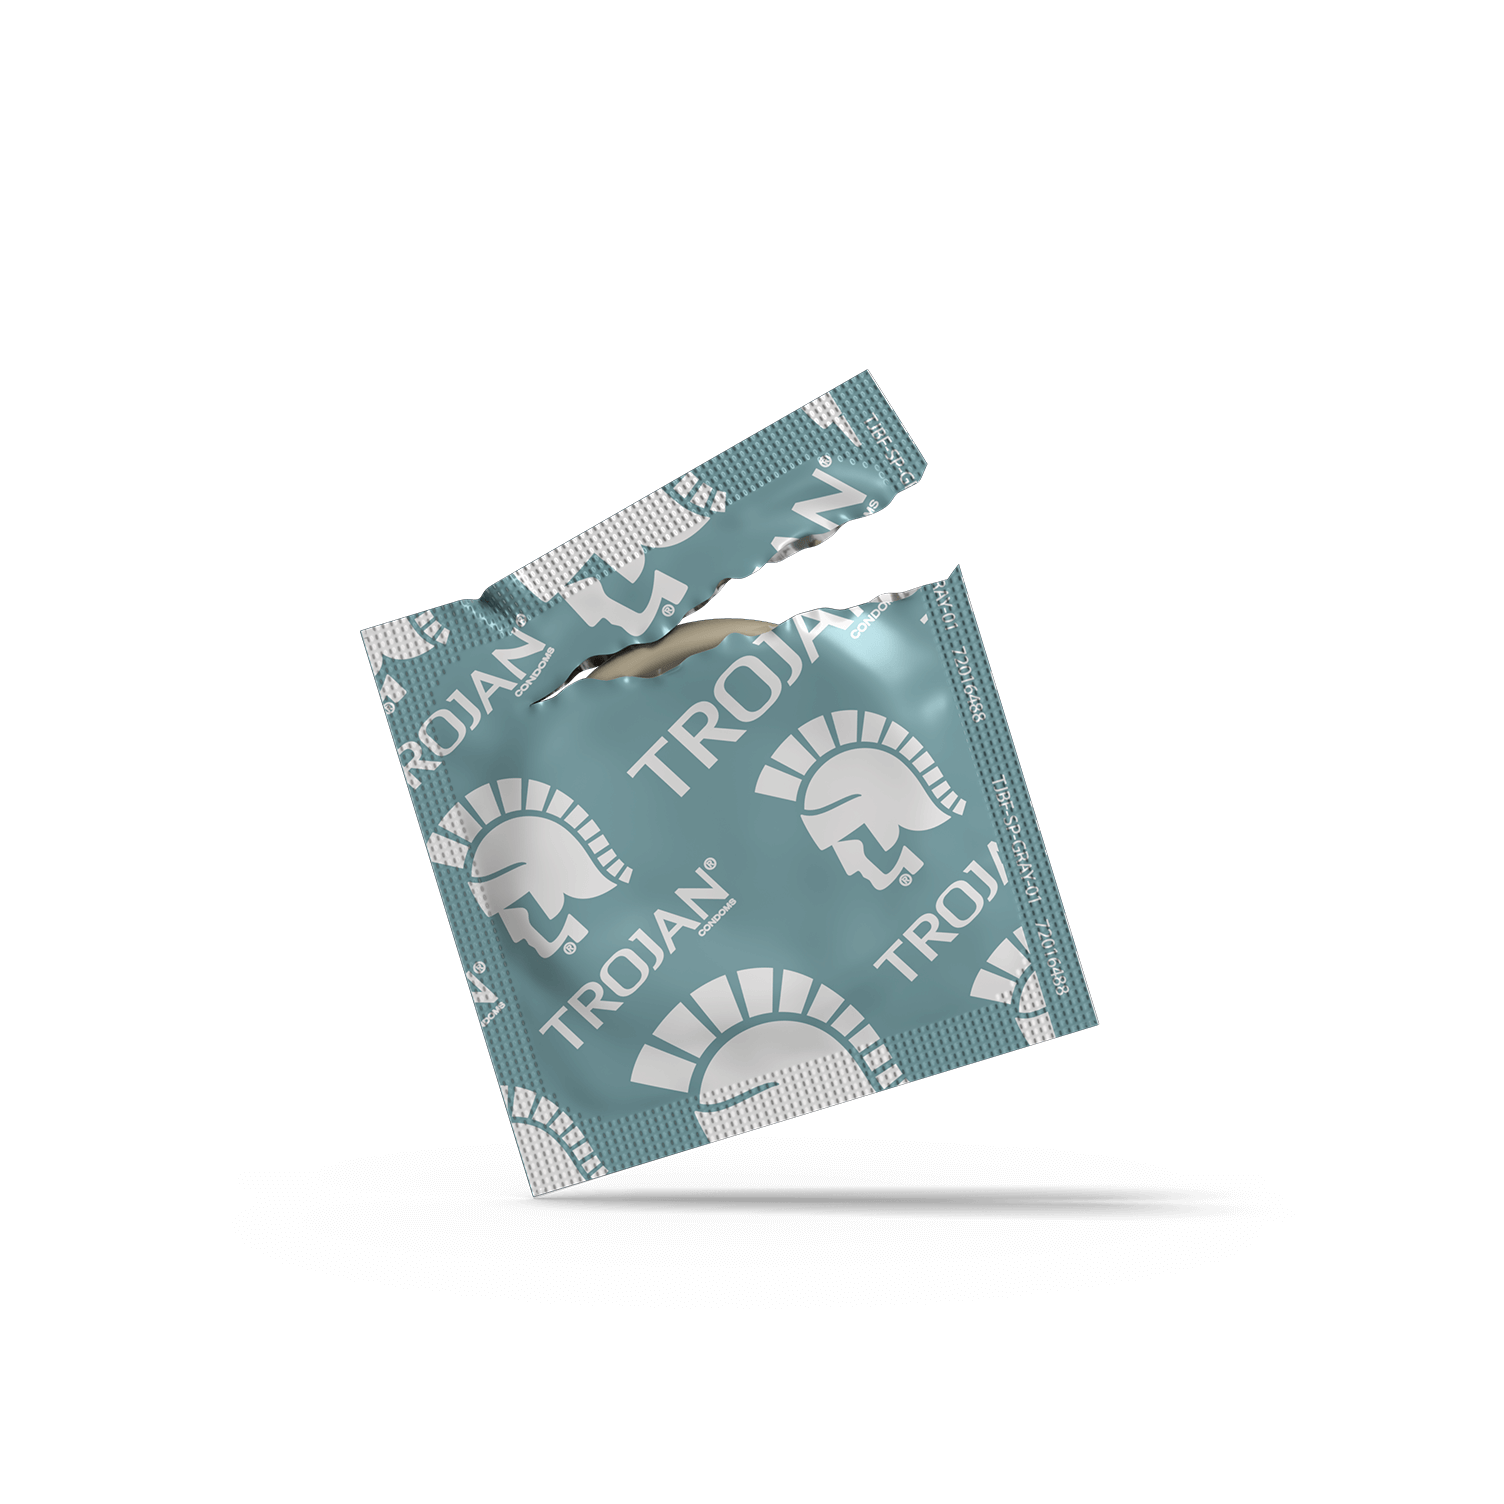 https://www.trojanbrands.com/images/pdp/hero/trojan-ultra-thin-lubricated-condoms/hero-03.png